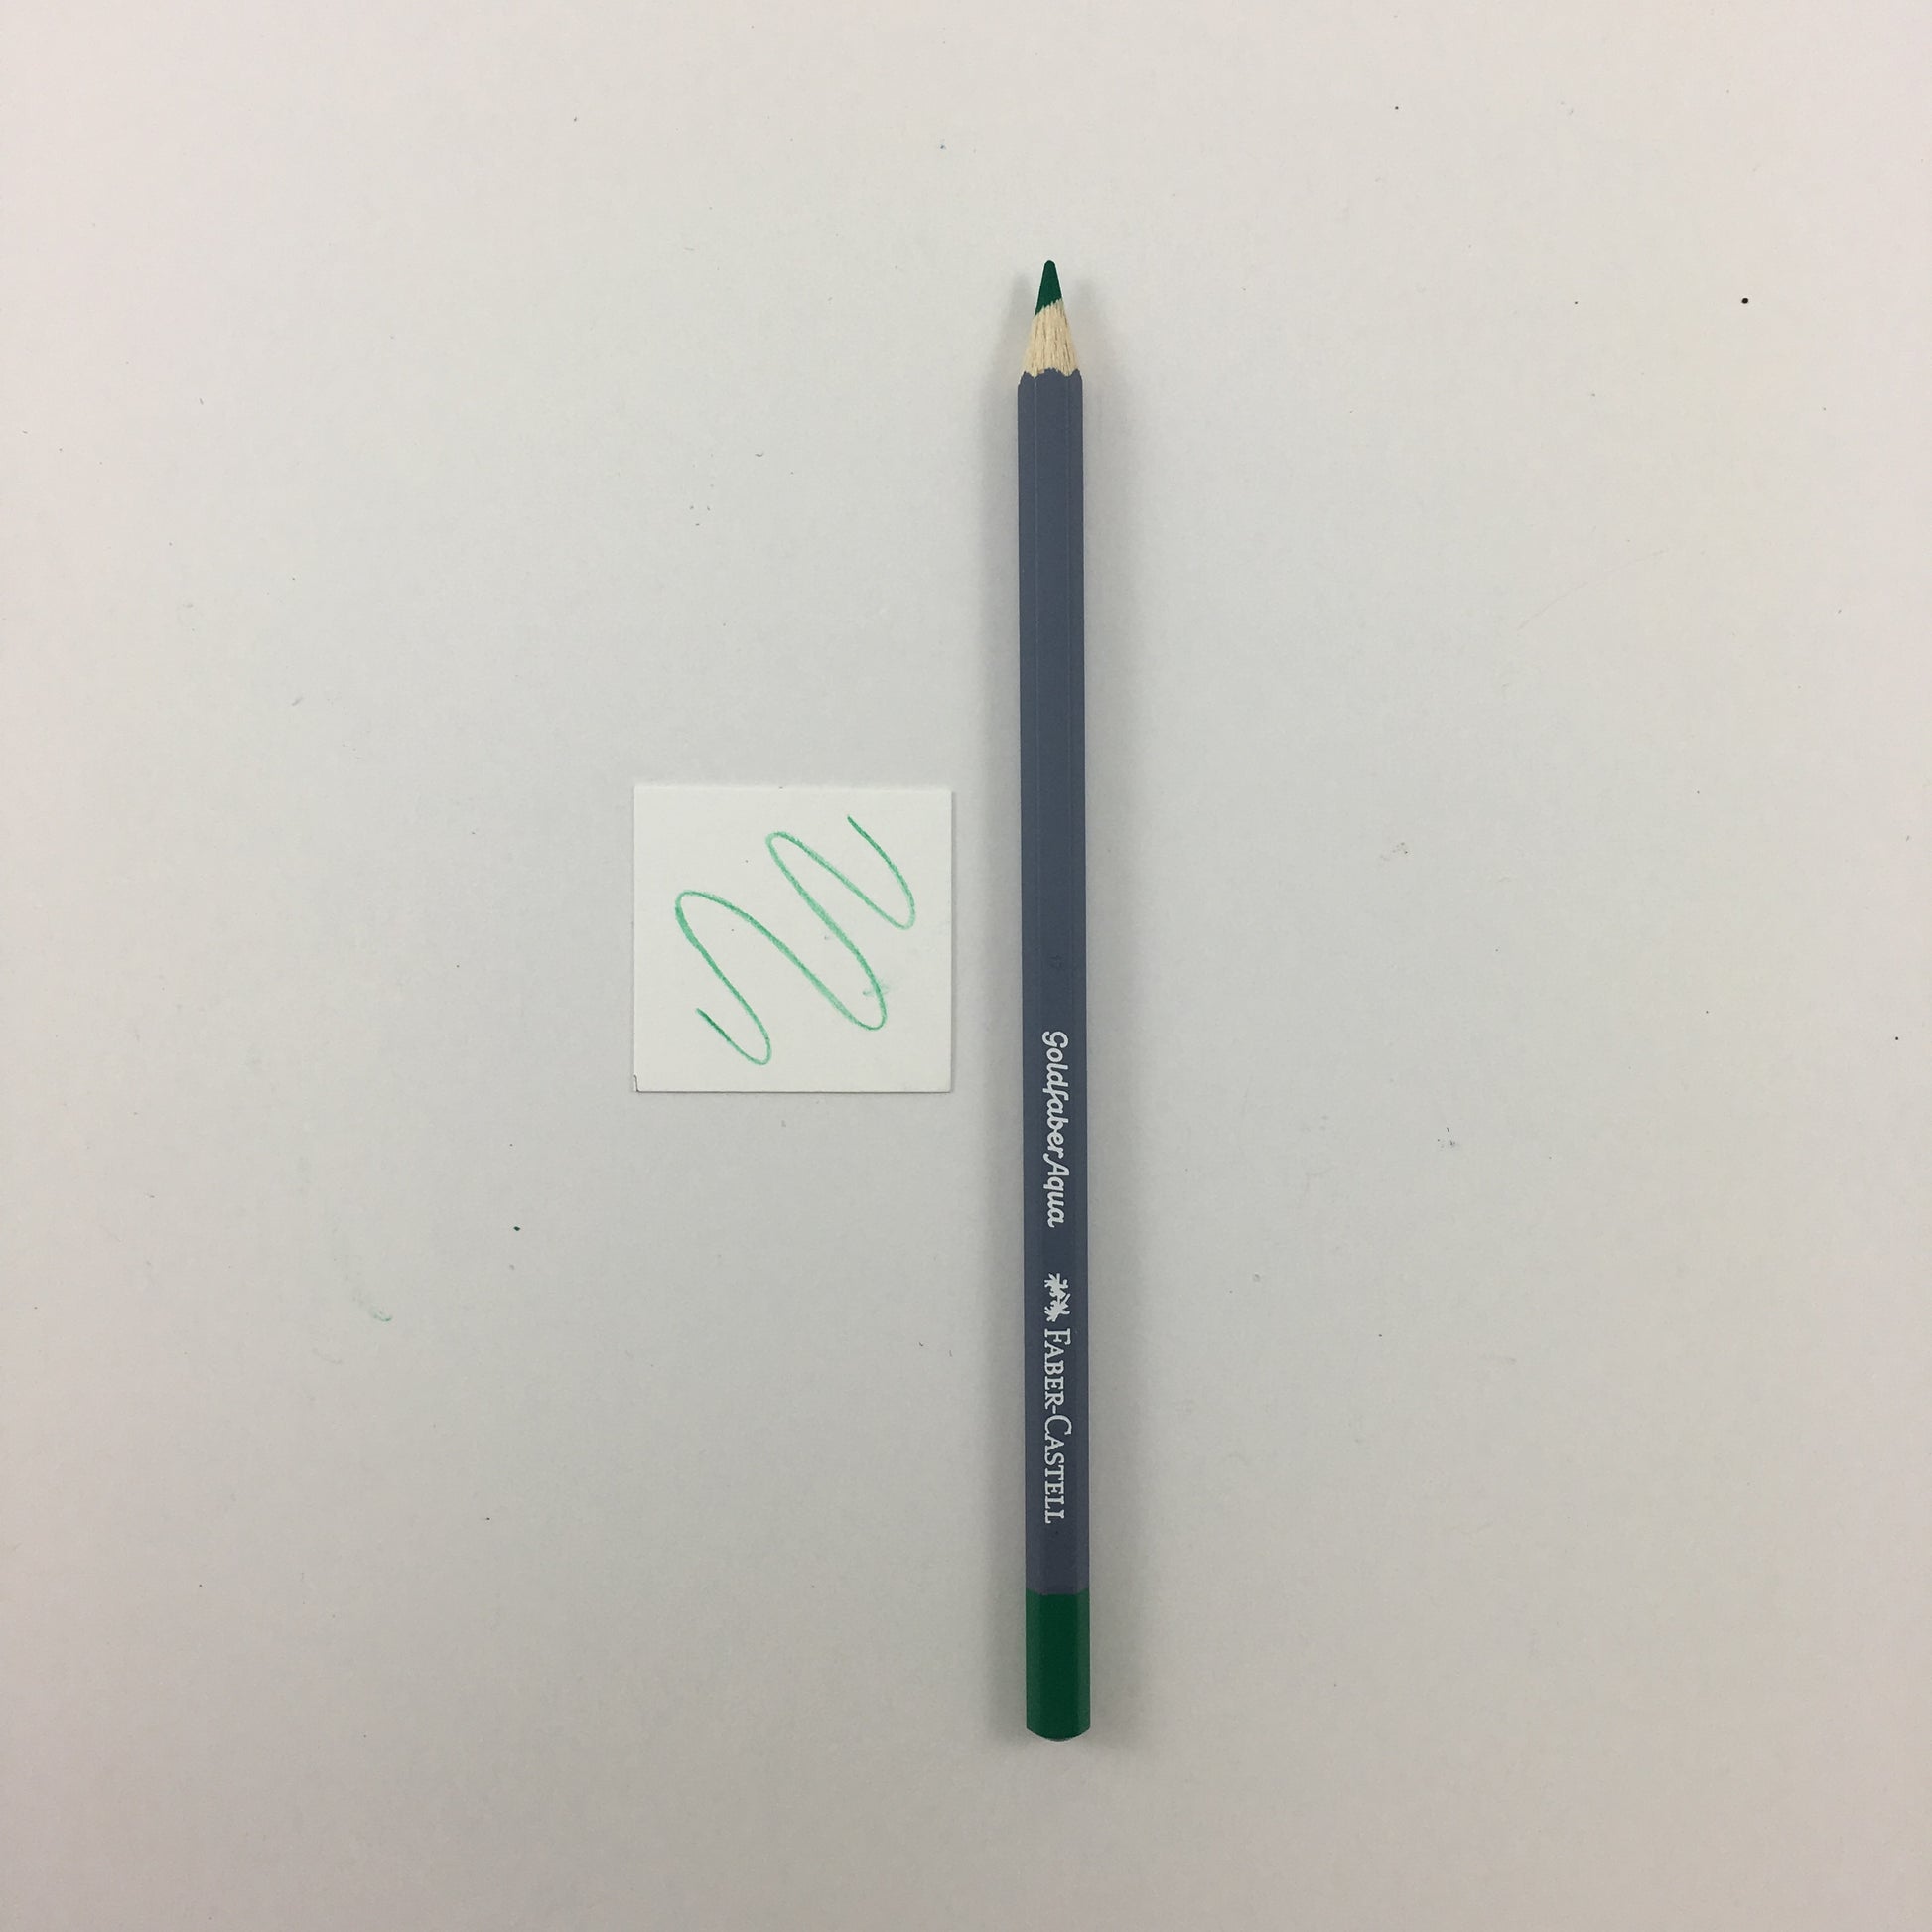 Faber-Castell Goldfaber Aqua Watercolor Pencils - Individuals - 163 - Emerald Green by Faber-Castell - K. A. Artist Shop